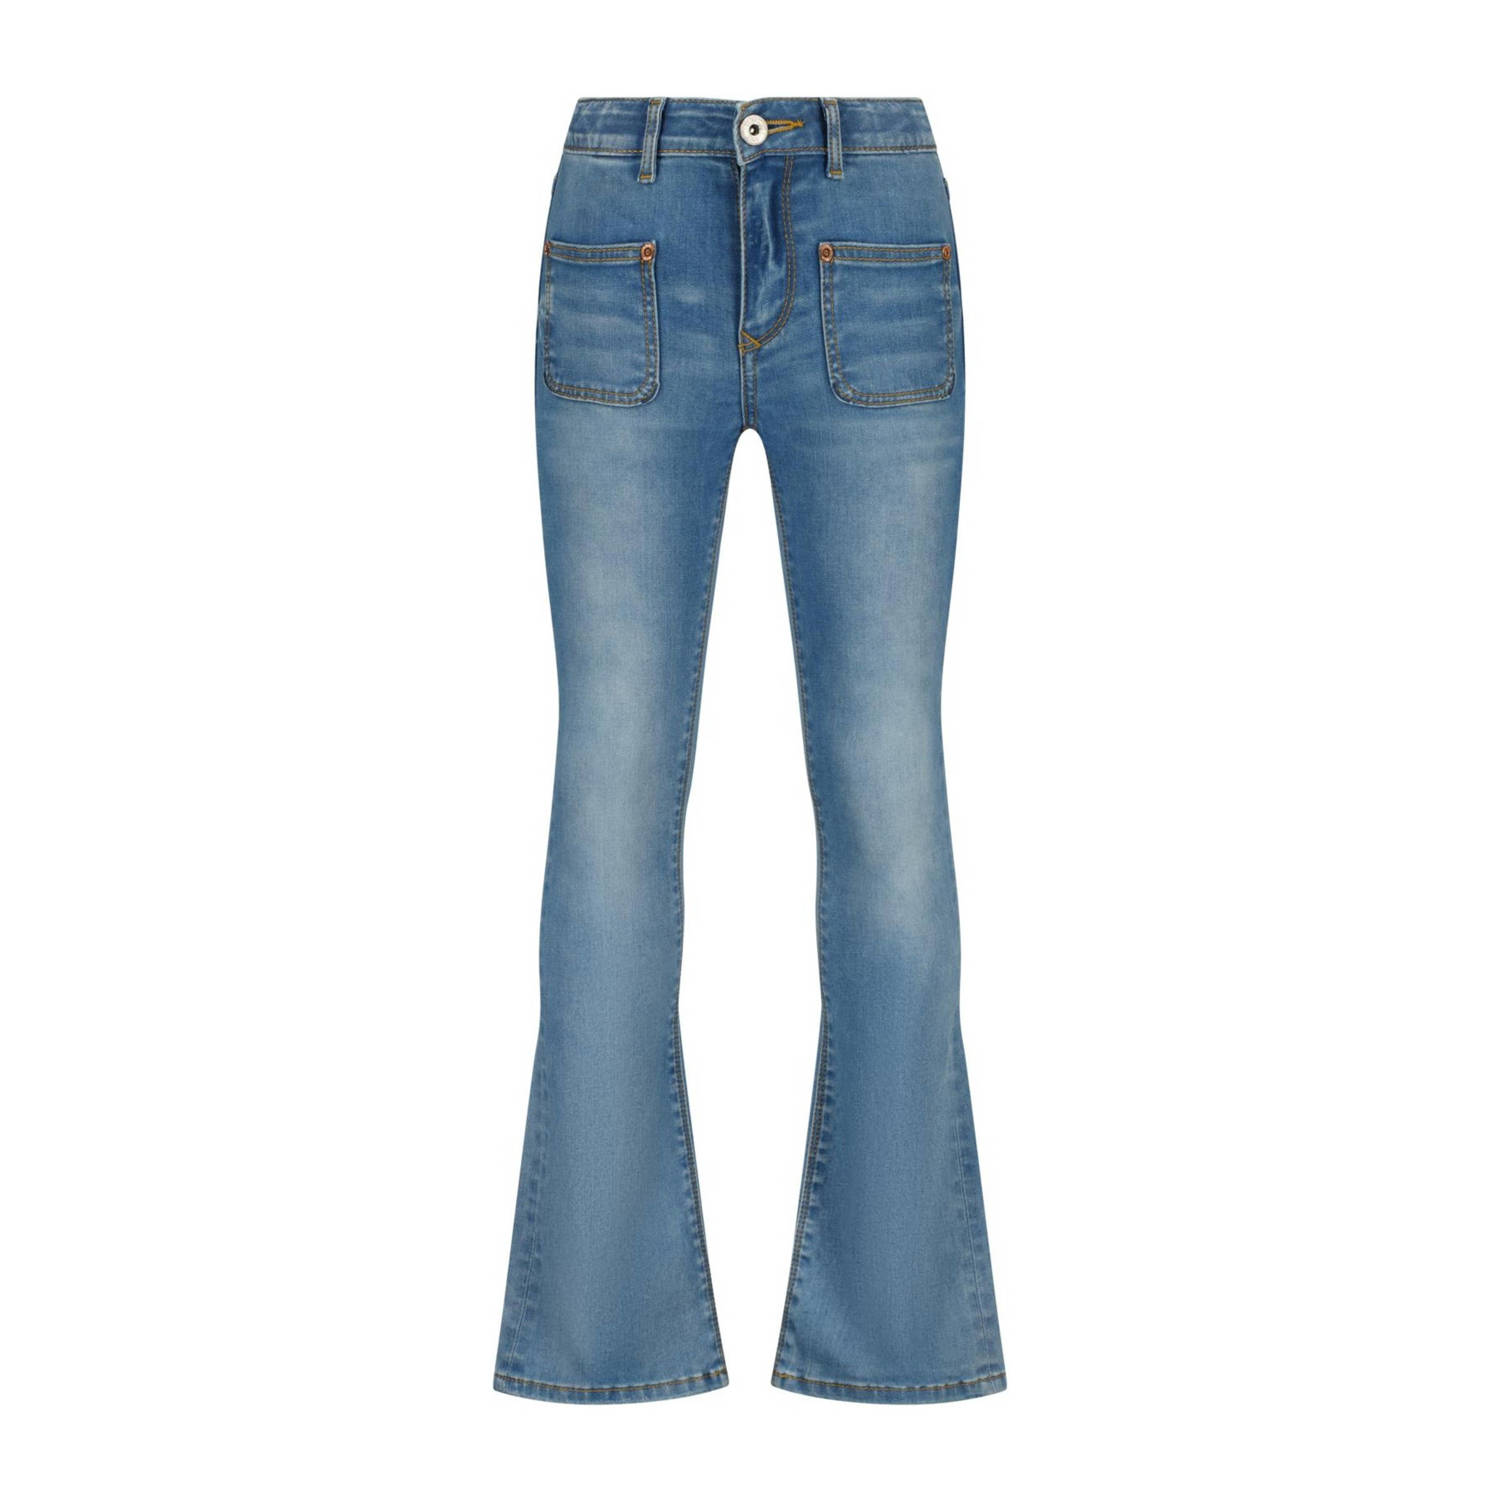 VINGINO flared jeans blue vintage Blauw Meisjes Katoen Effen 134